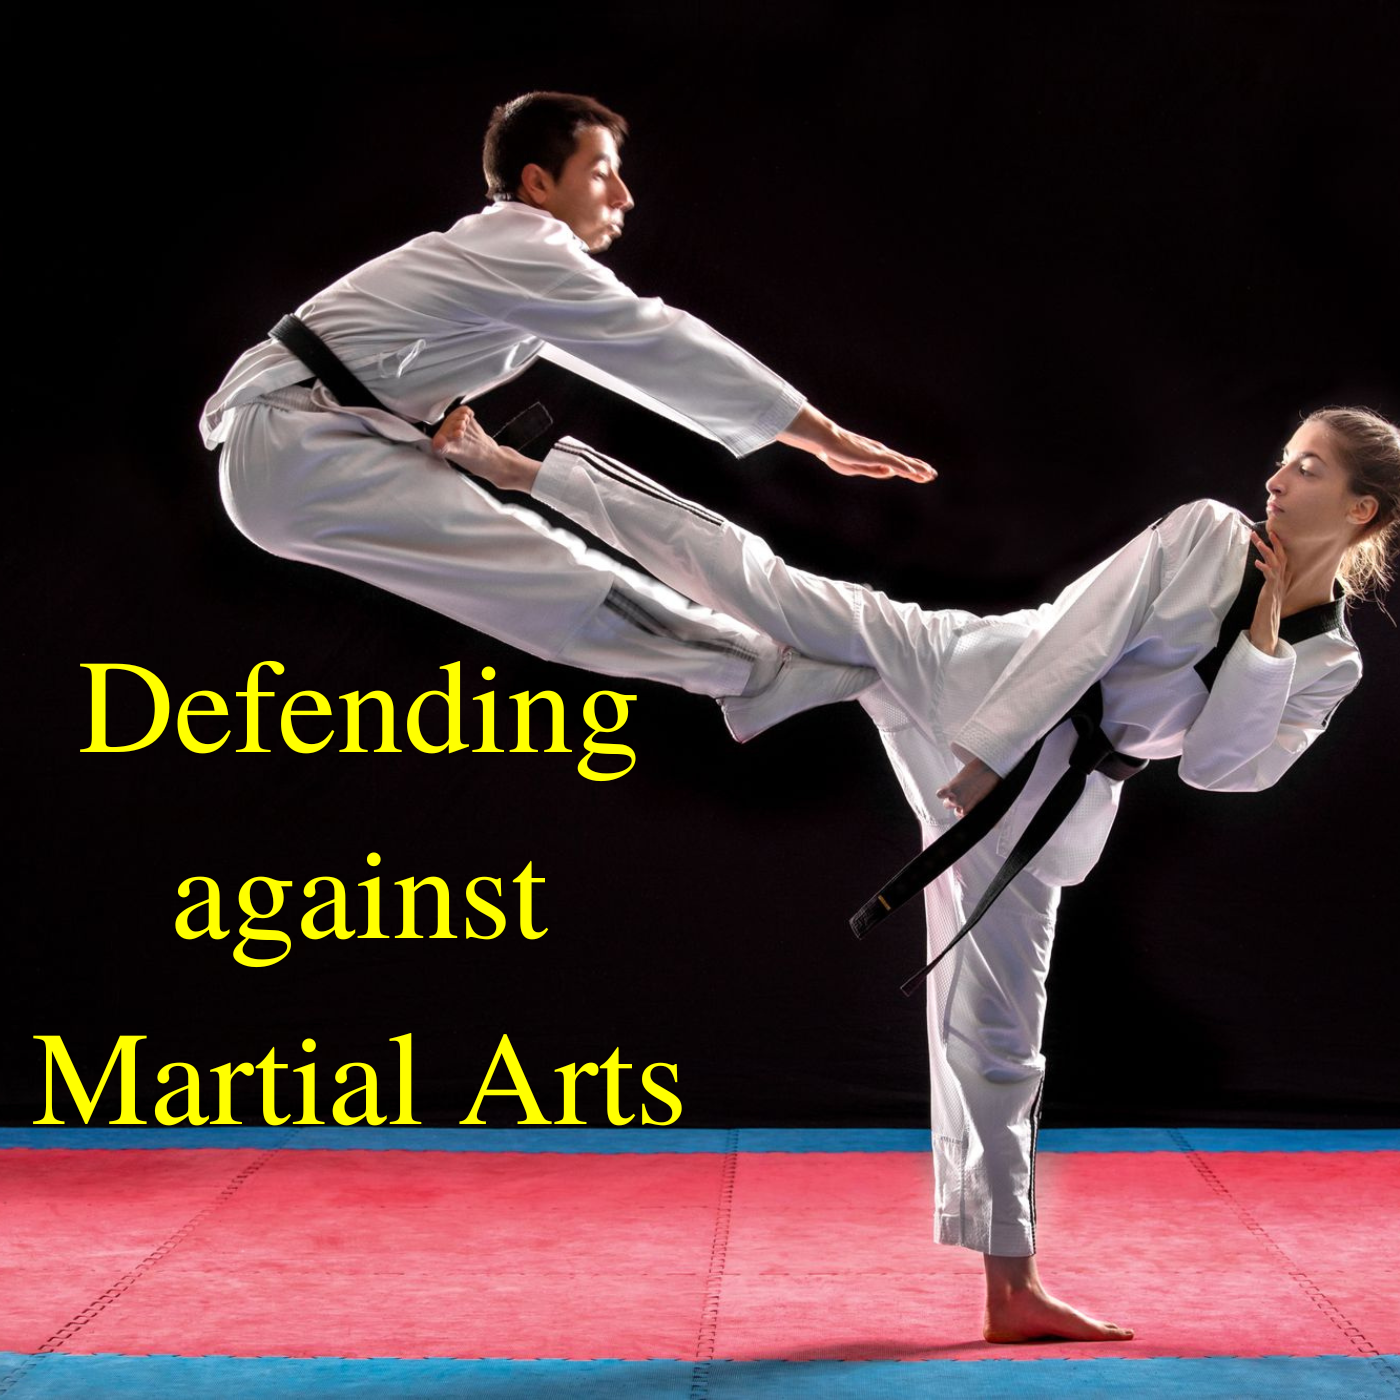 Defending against Martial Arts